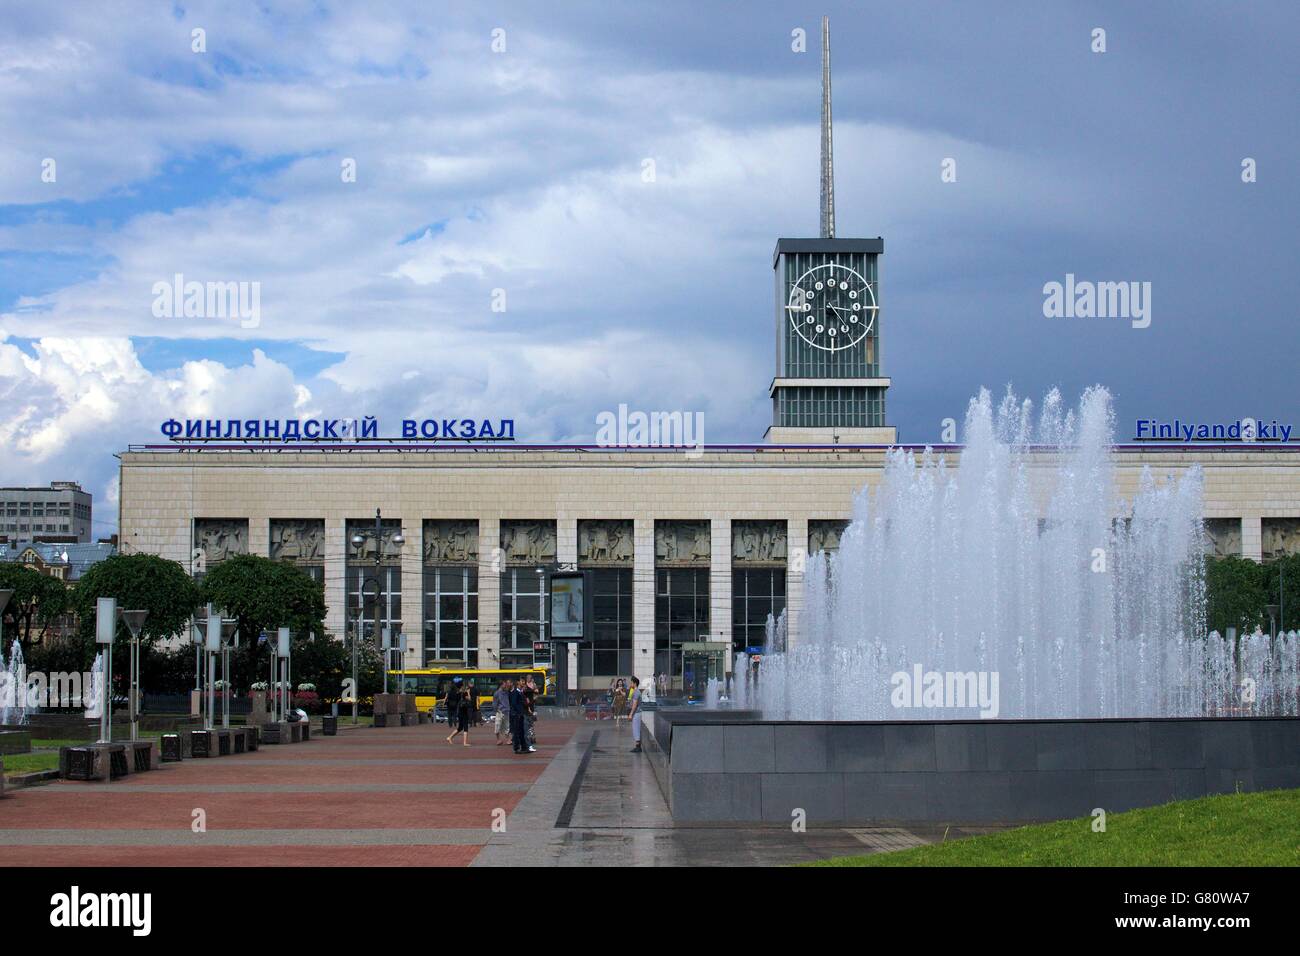 Finlyandskiy or Finland Railway Station, St Petersburg, Russia Stock Photo